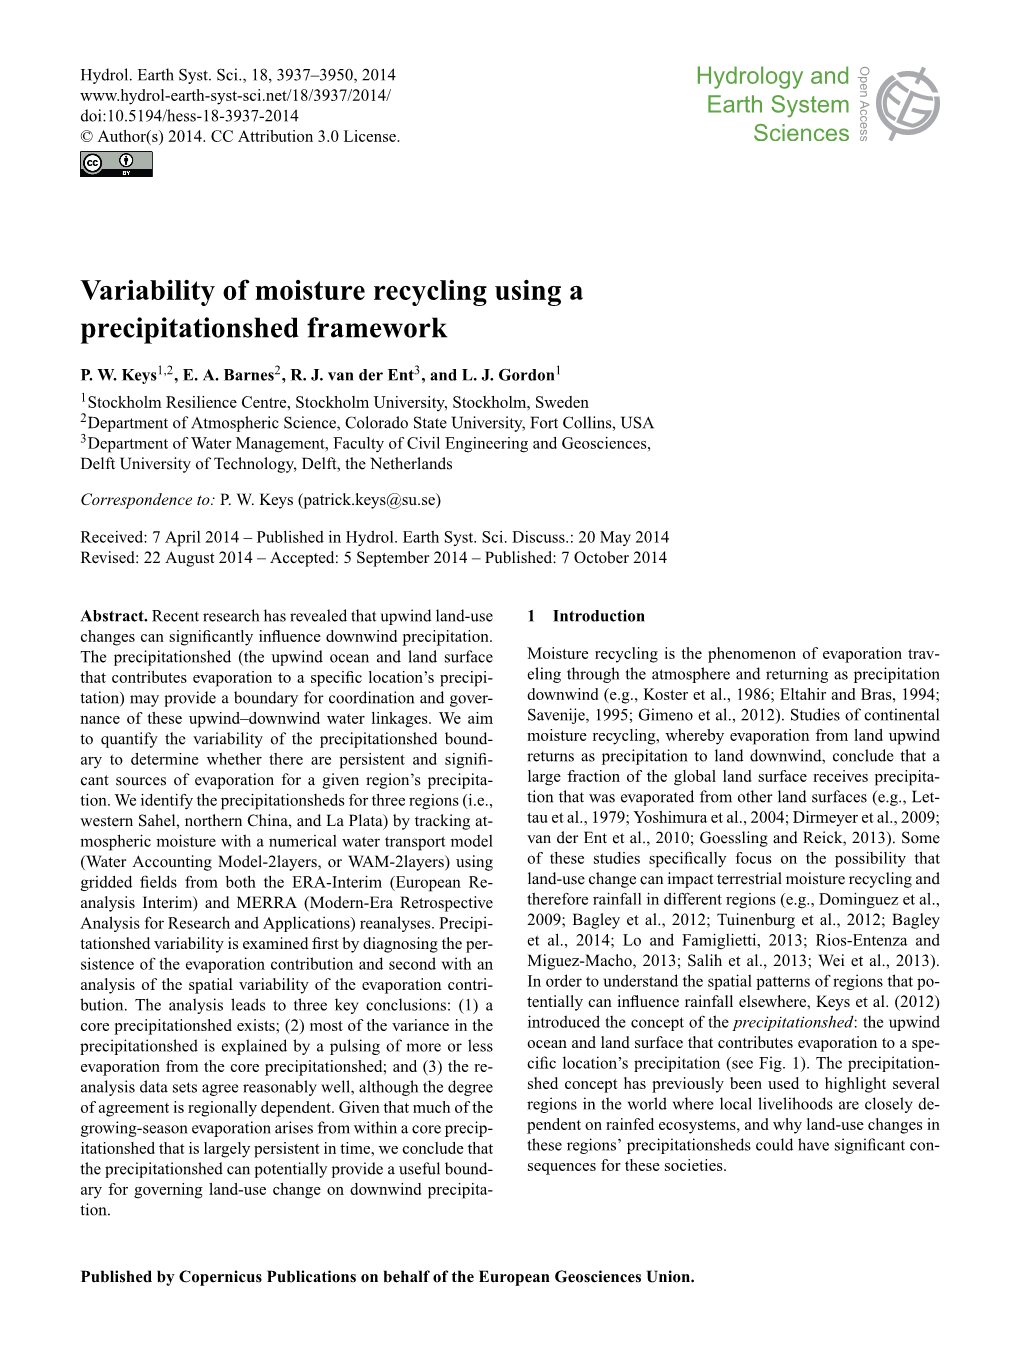 Variability of Moisture Recycling Using a Precipitationshed Framework